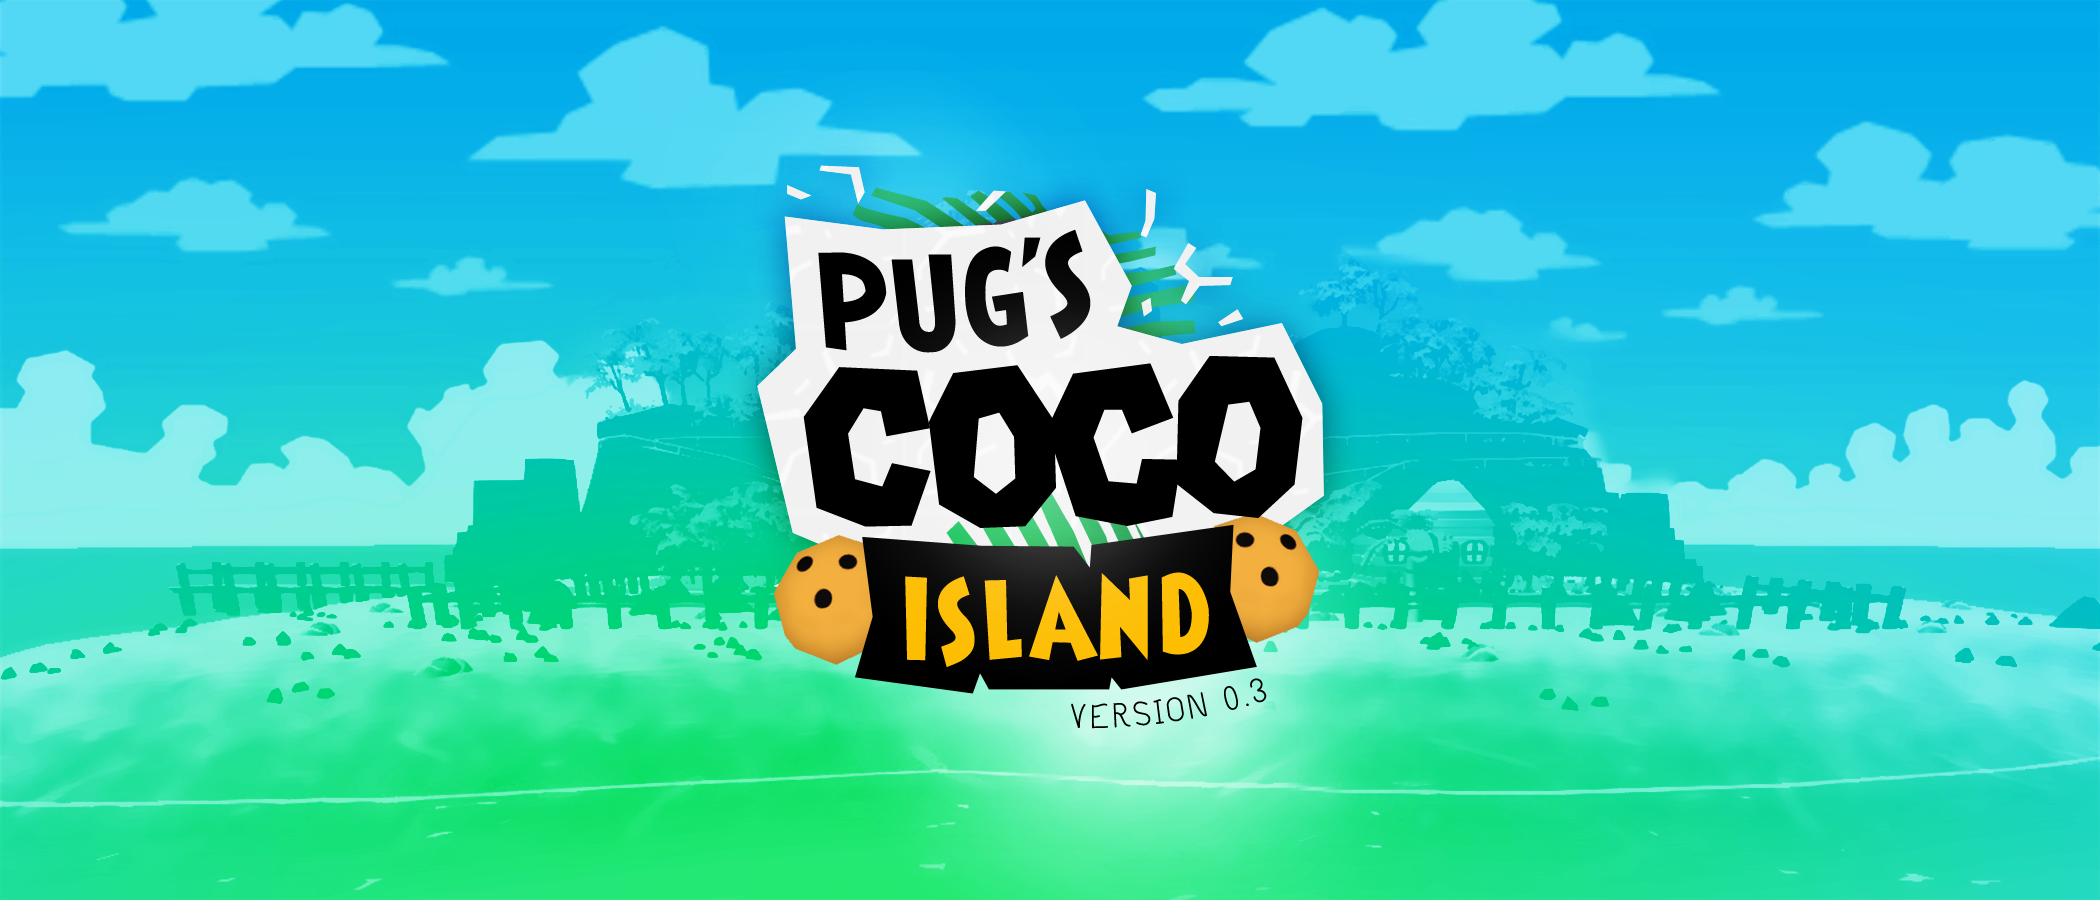 Pug's Coco Island